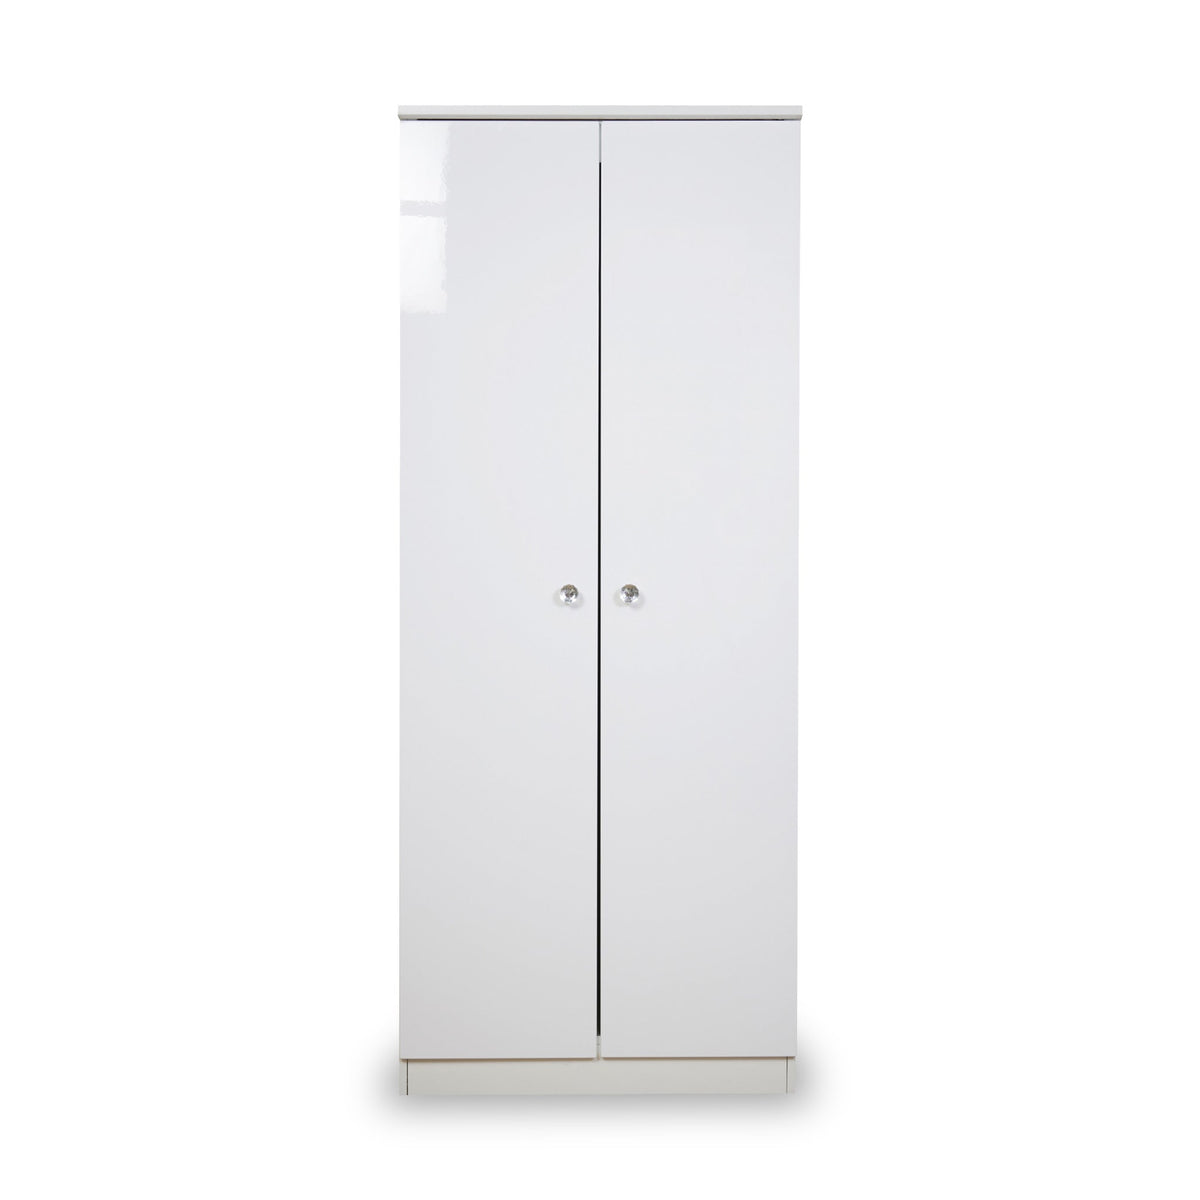 Aria White Gloss LED Lighting 2 Door Double Wardrobe from Roseland Furniture